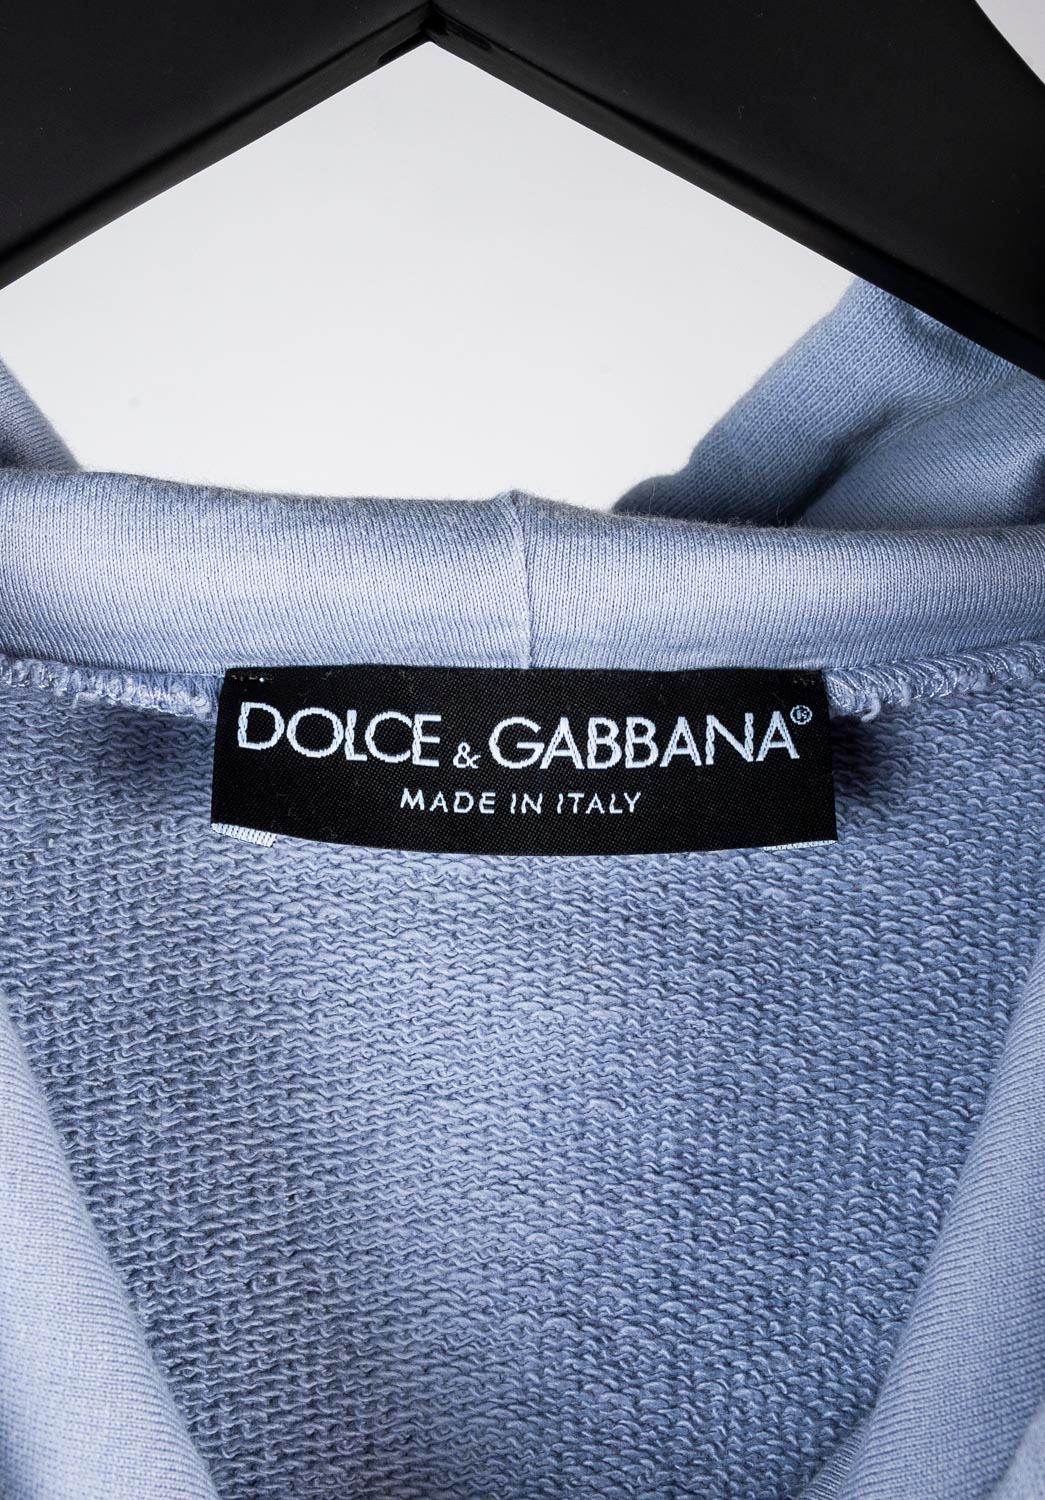 Dolce&Gabbana Marlon Brando Hoodie Sweatshirt Men Jumper Size 48IT, S541 For Sale 2